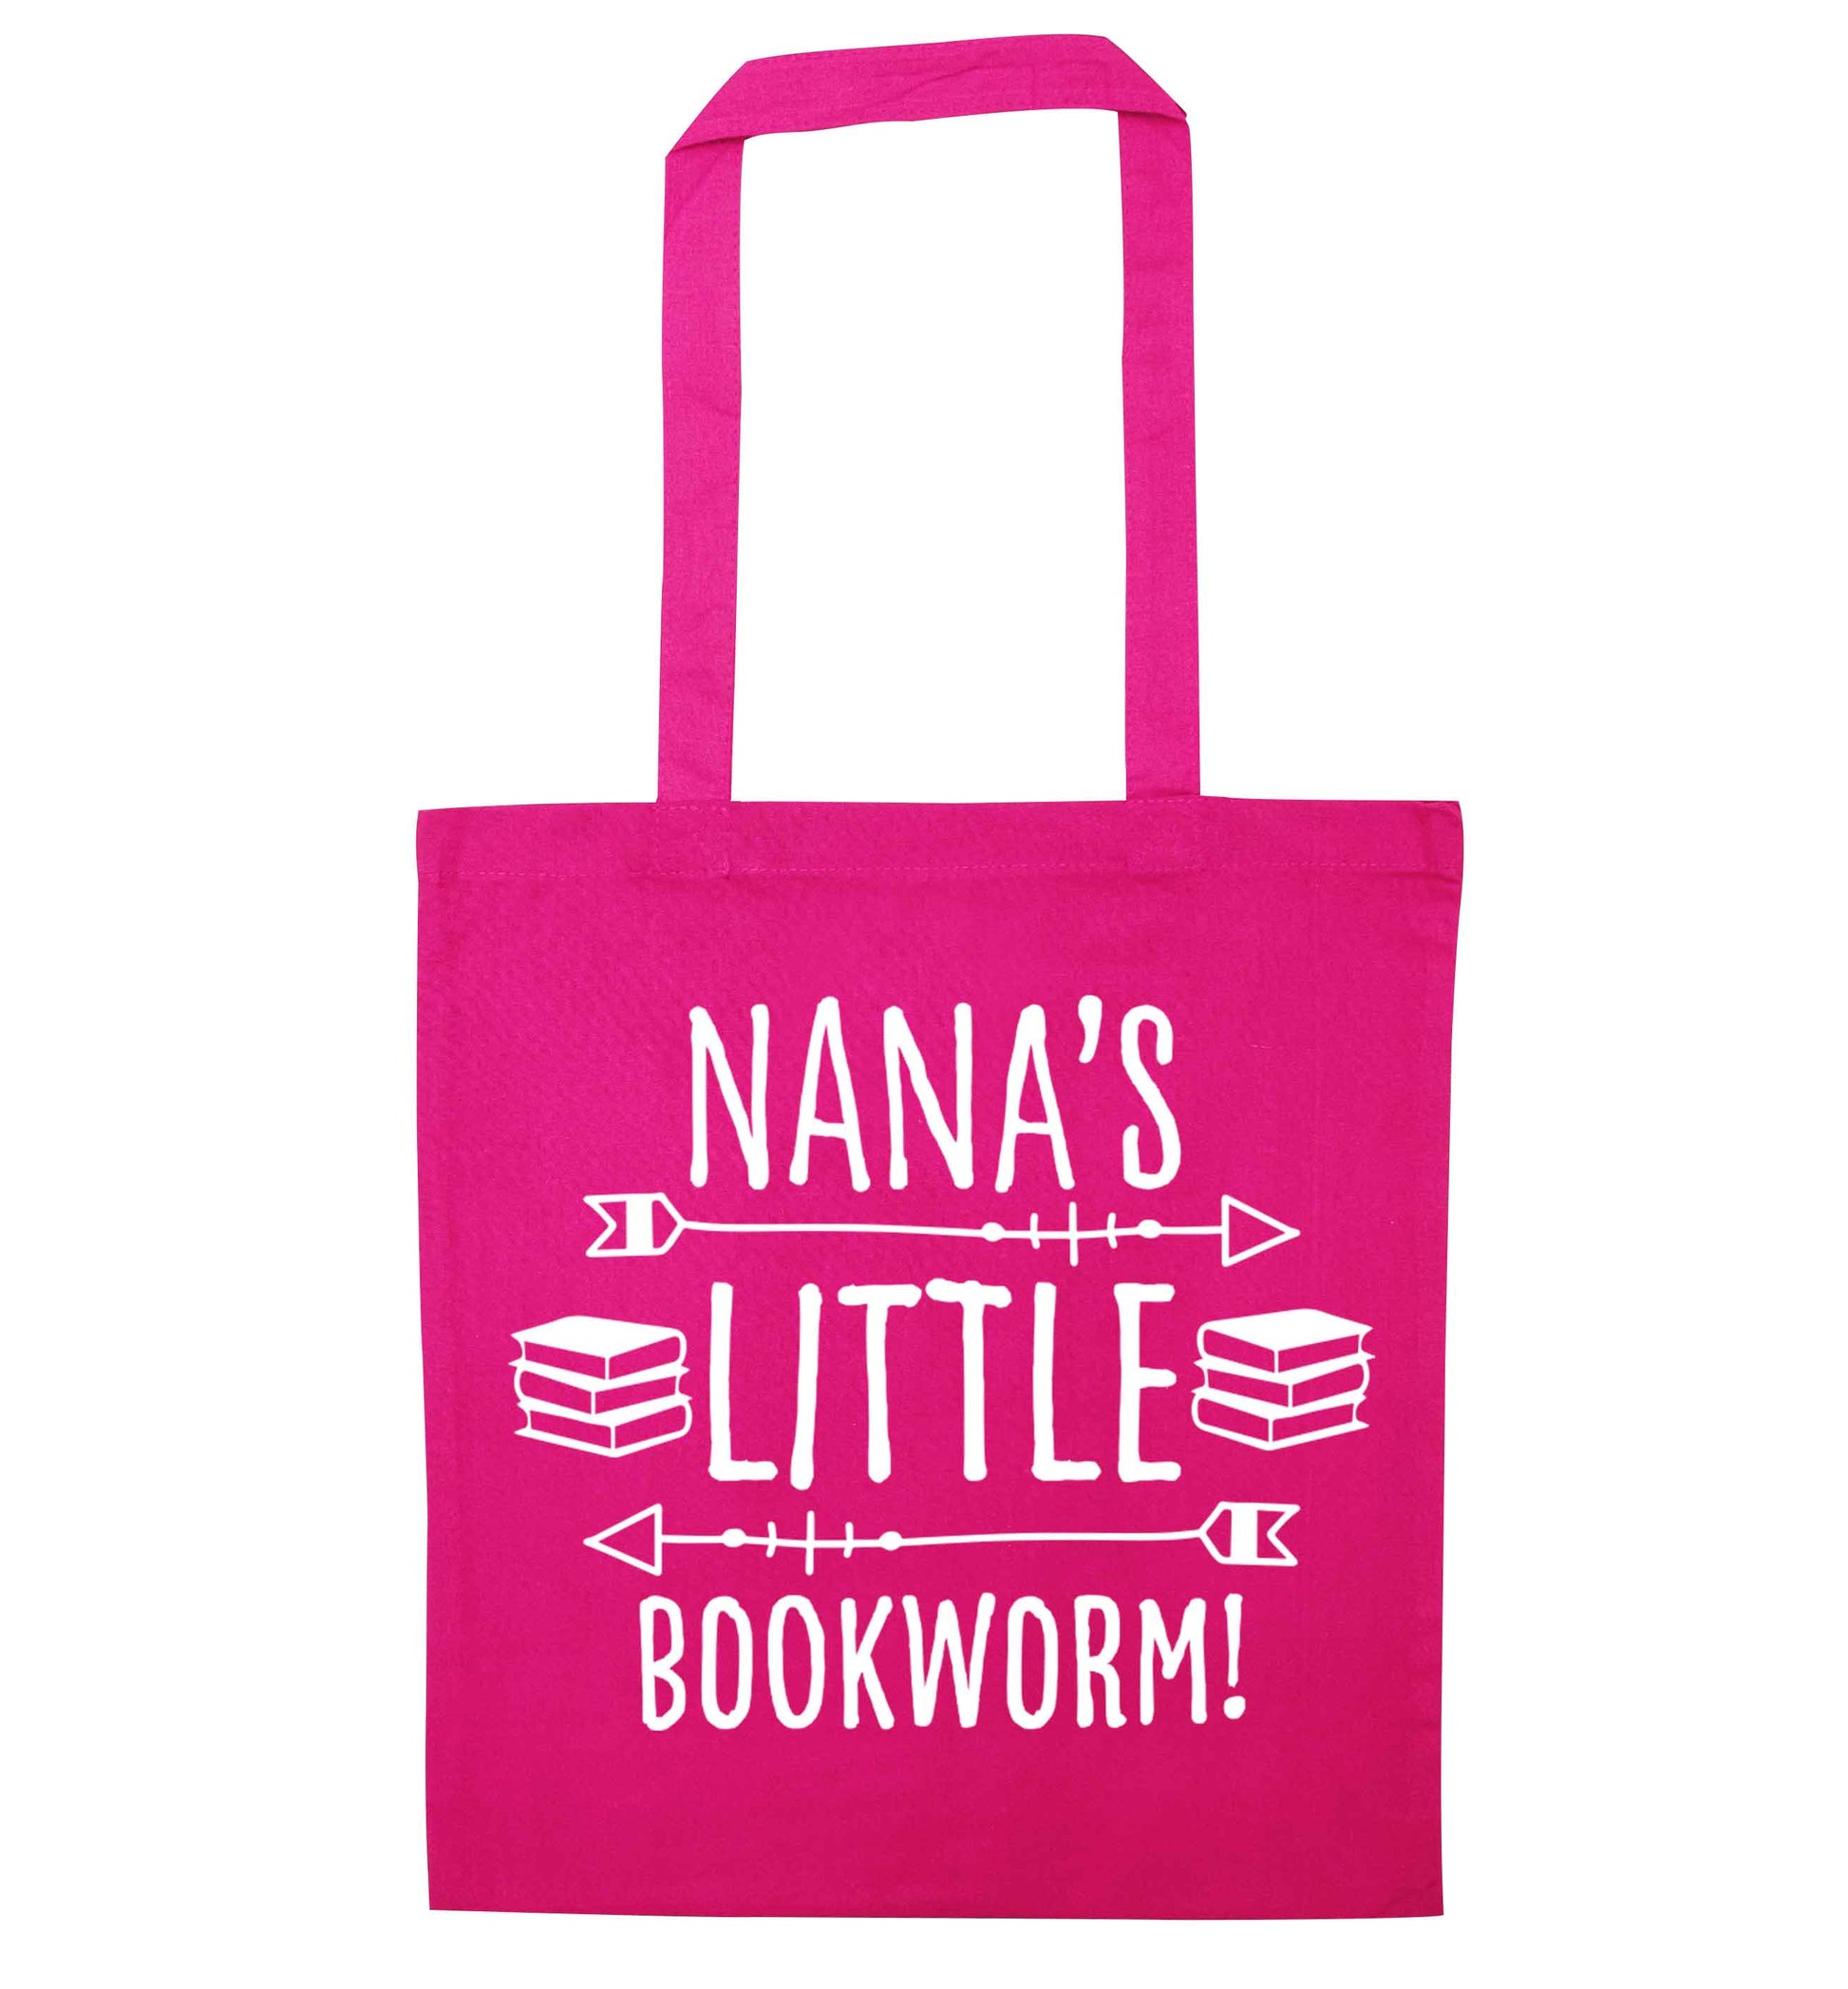 Nana's little bookworm pink tote bag